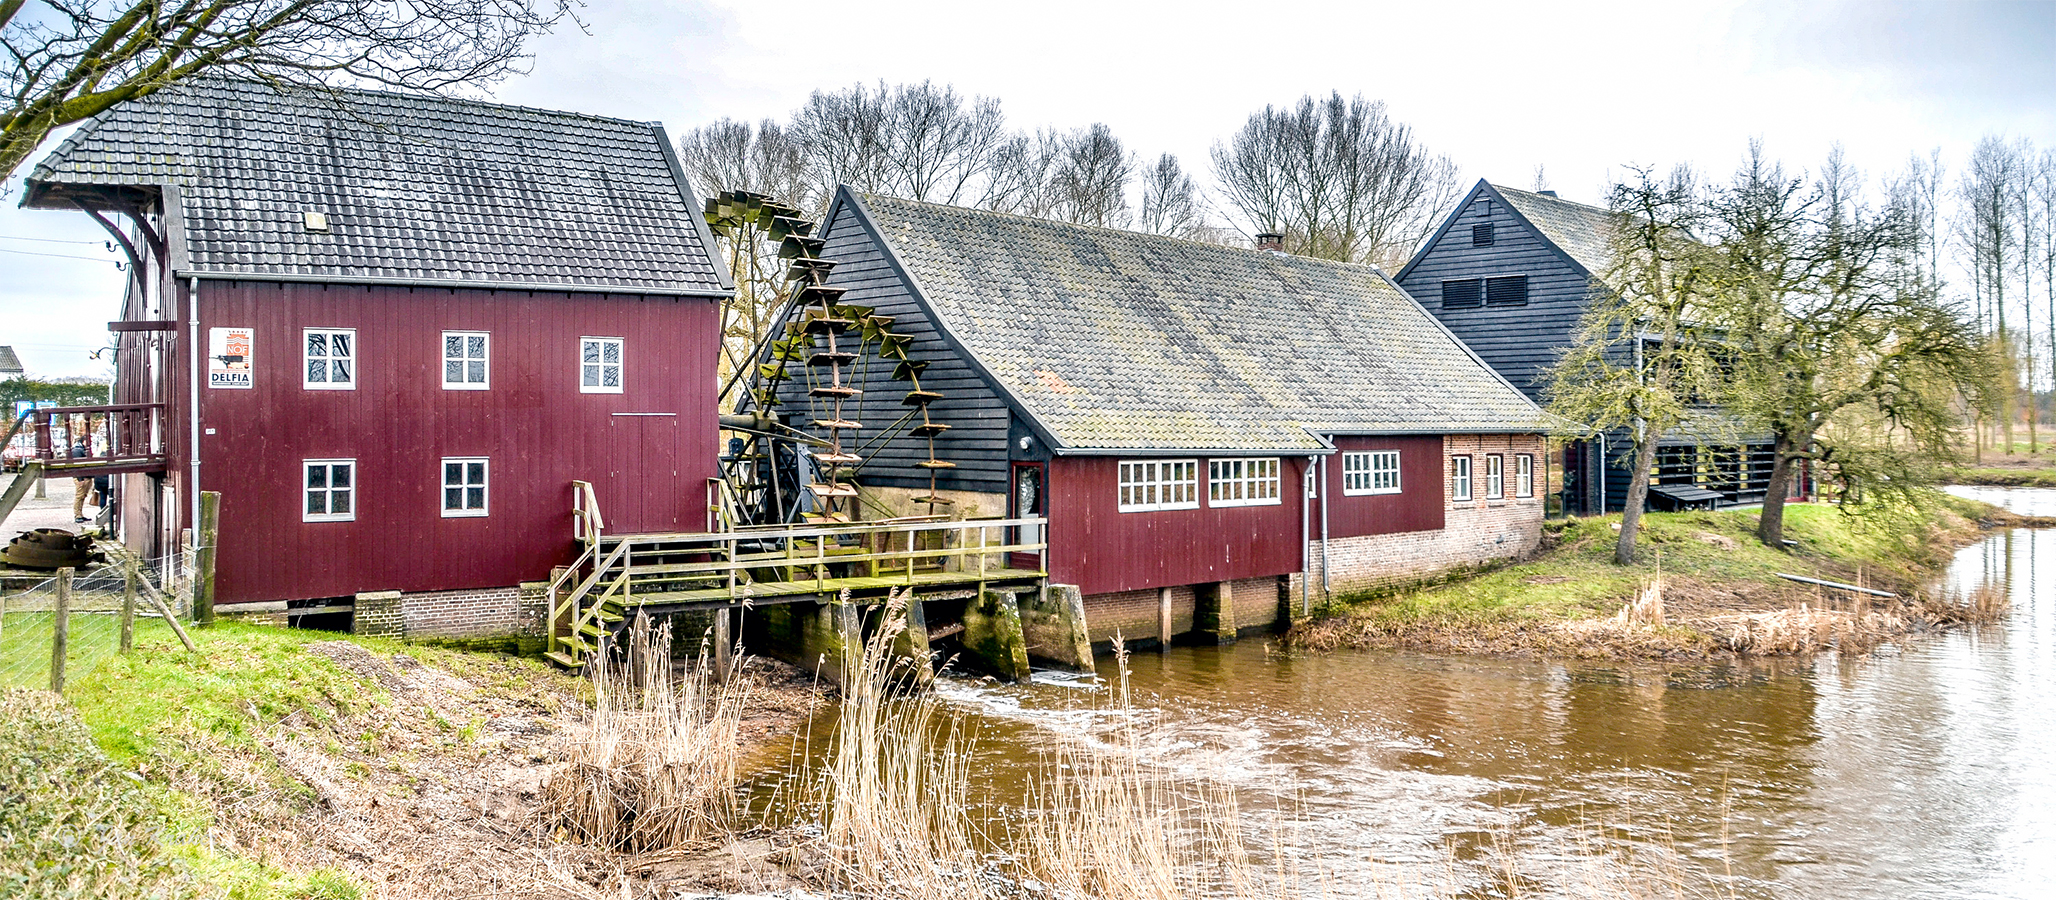 Foto van Opwettense Watermolen, Opwetten, Jan Kraker (1-3-2013) | Database Nederlandse molens